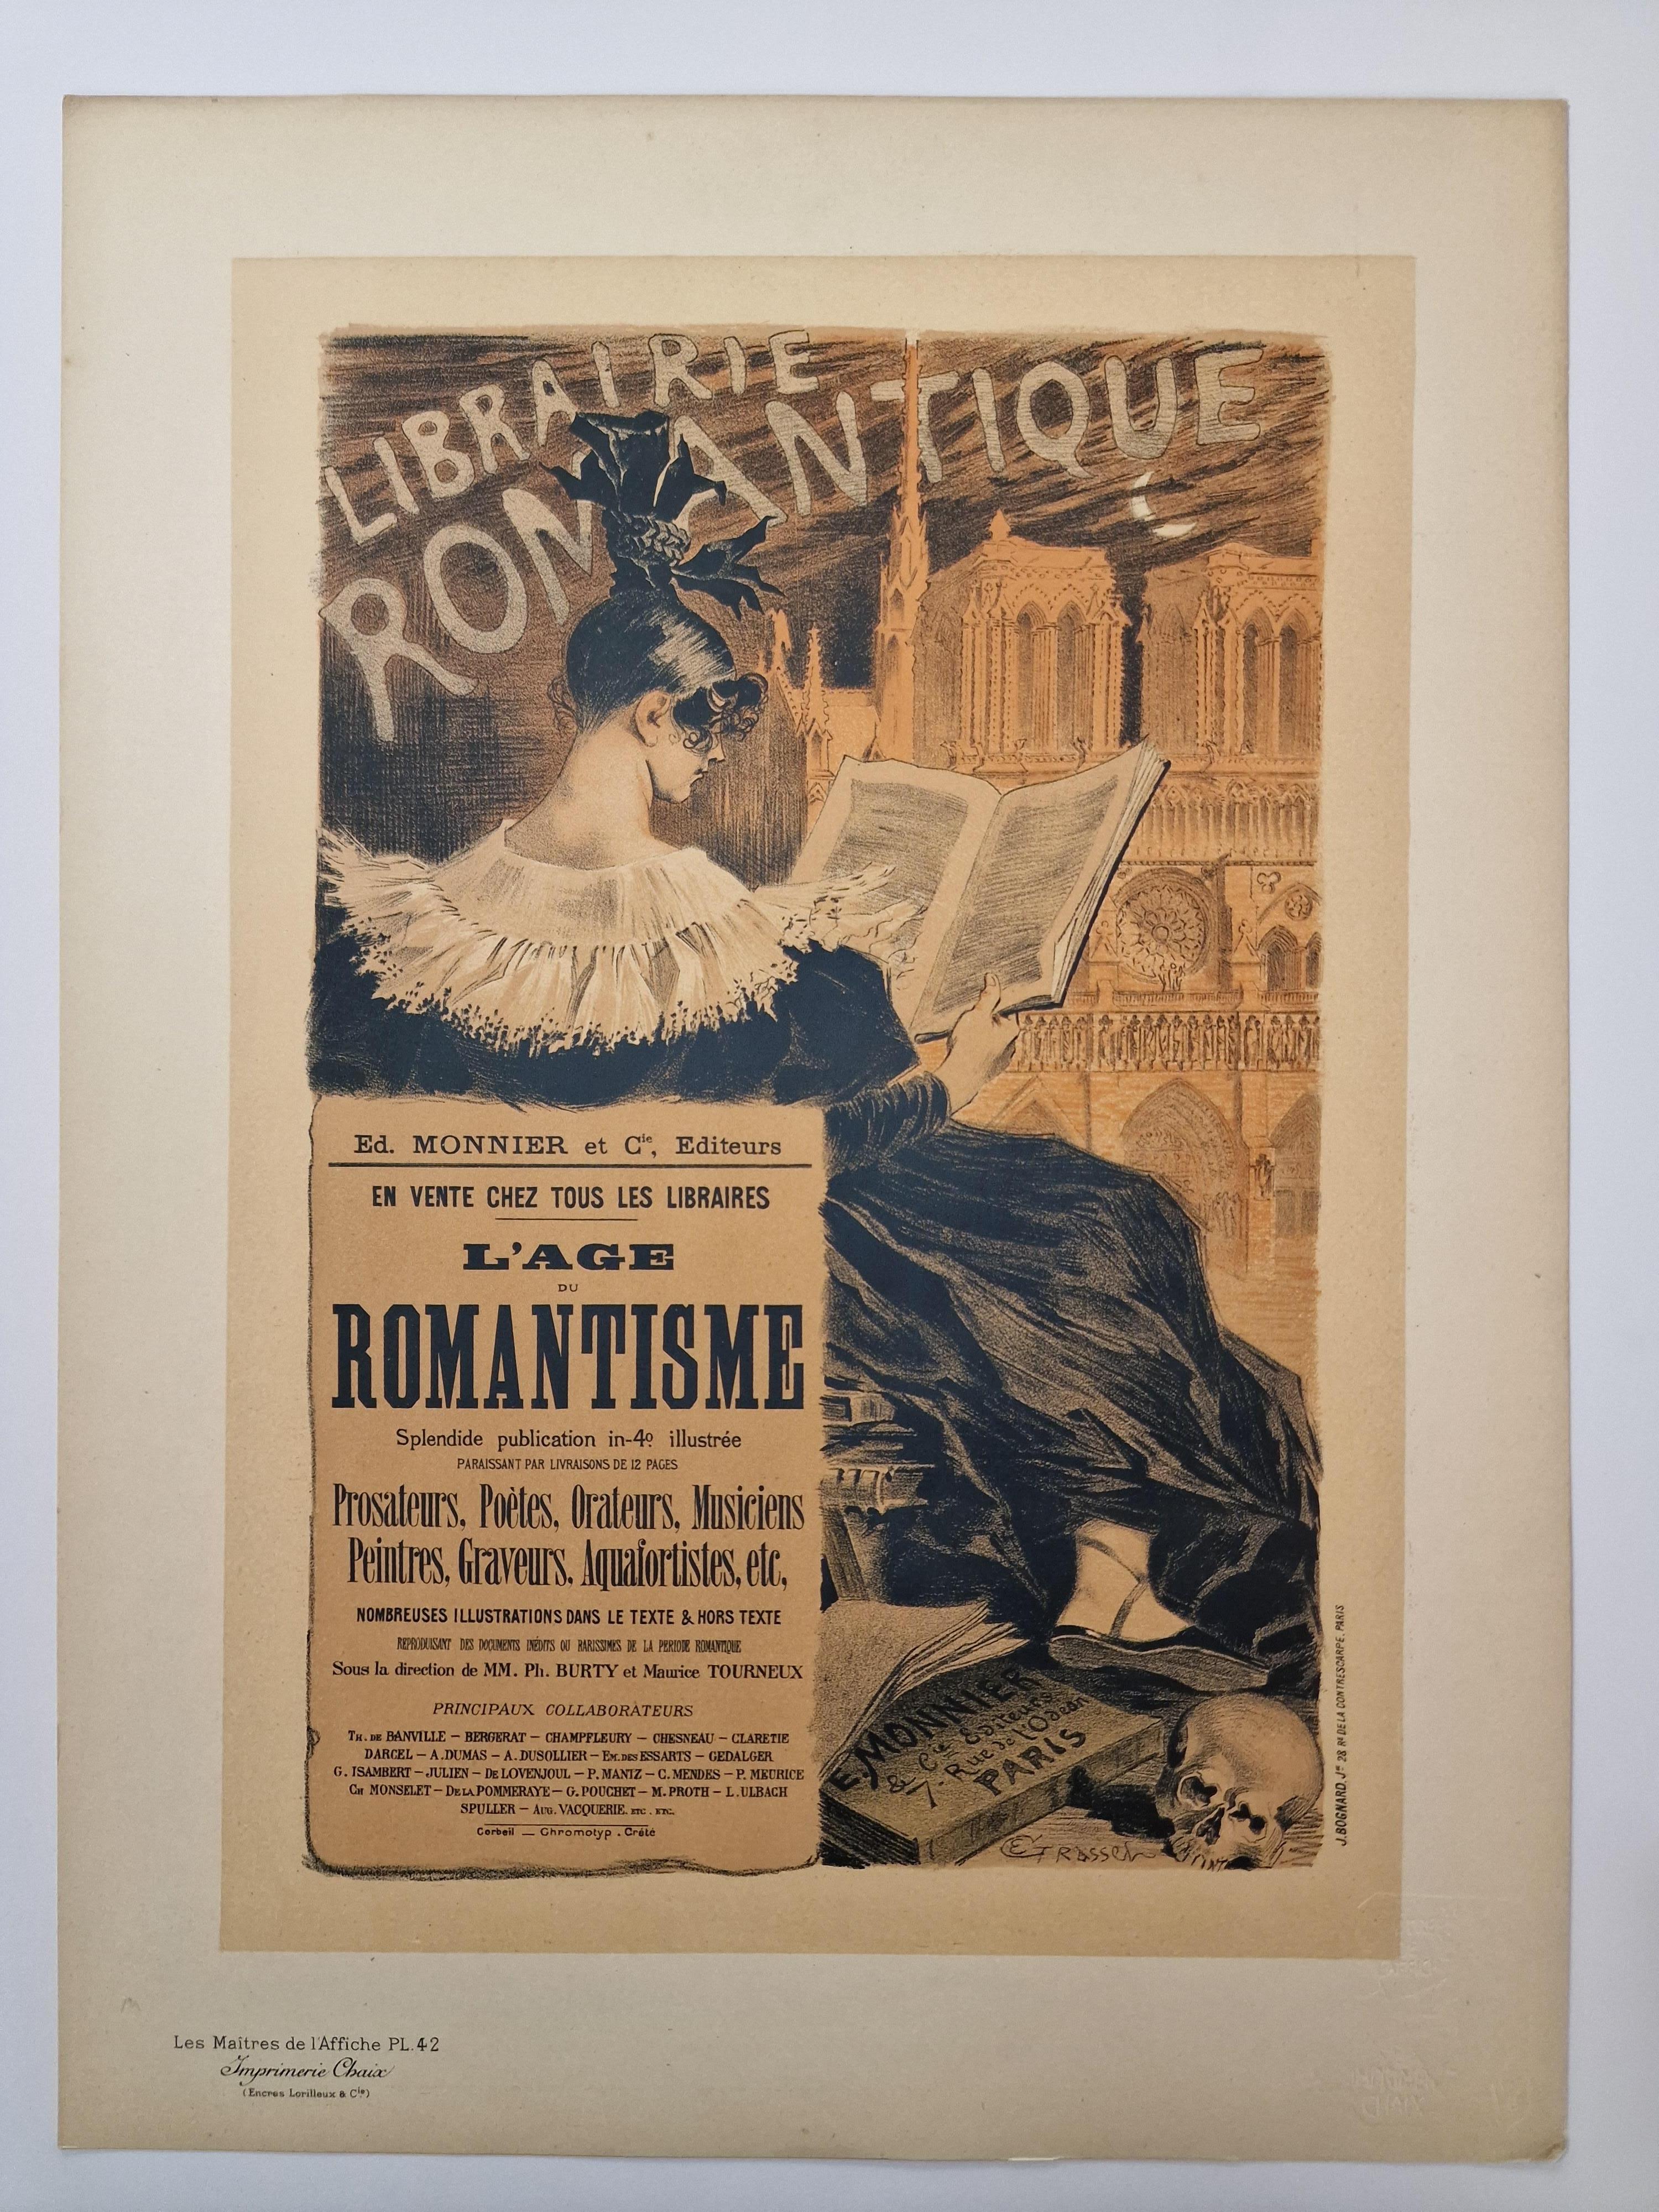 Librairie Romantique - Print by Eugene Grasset